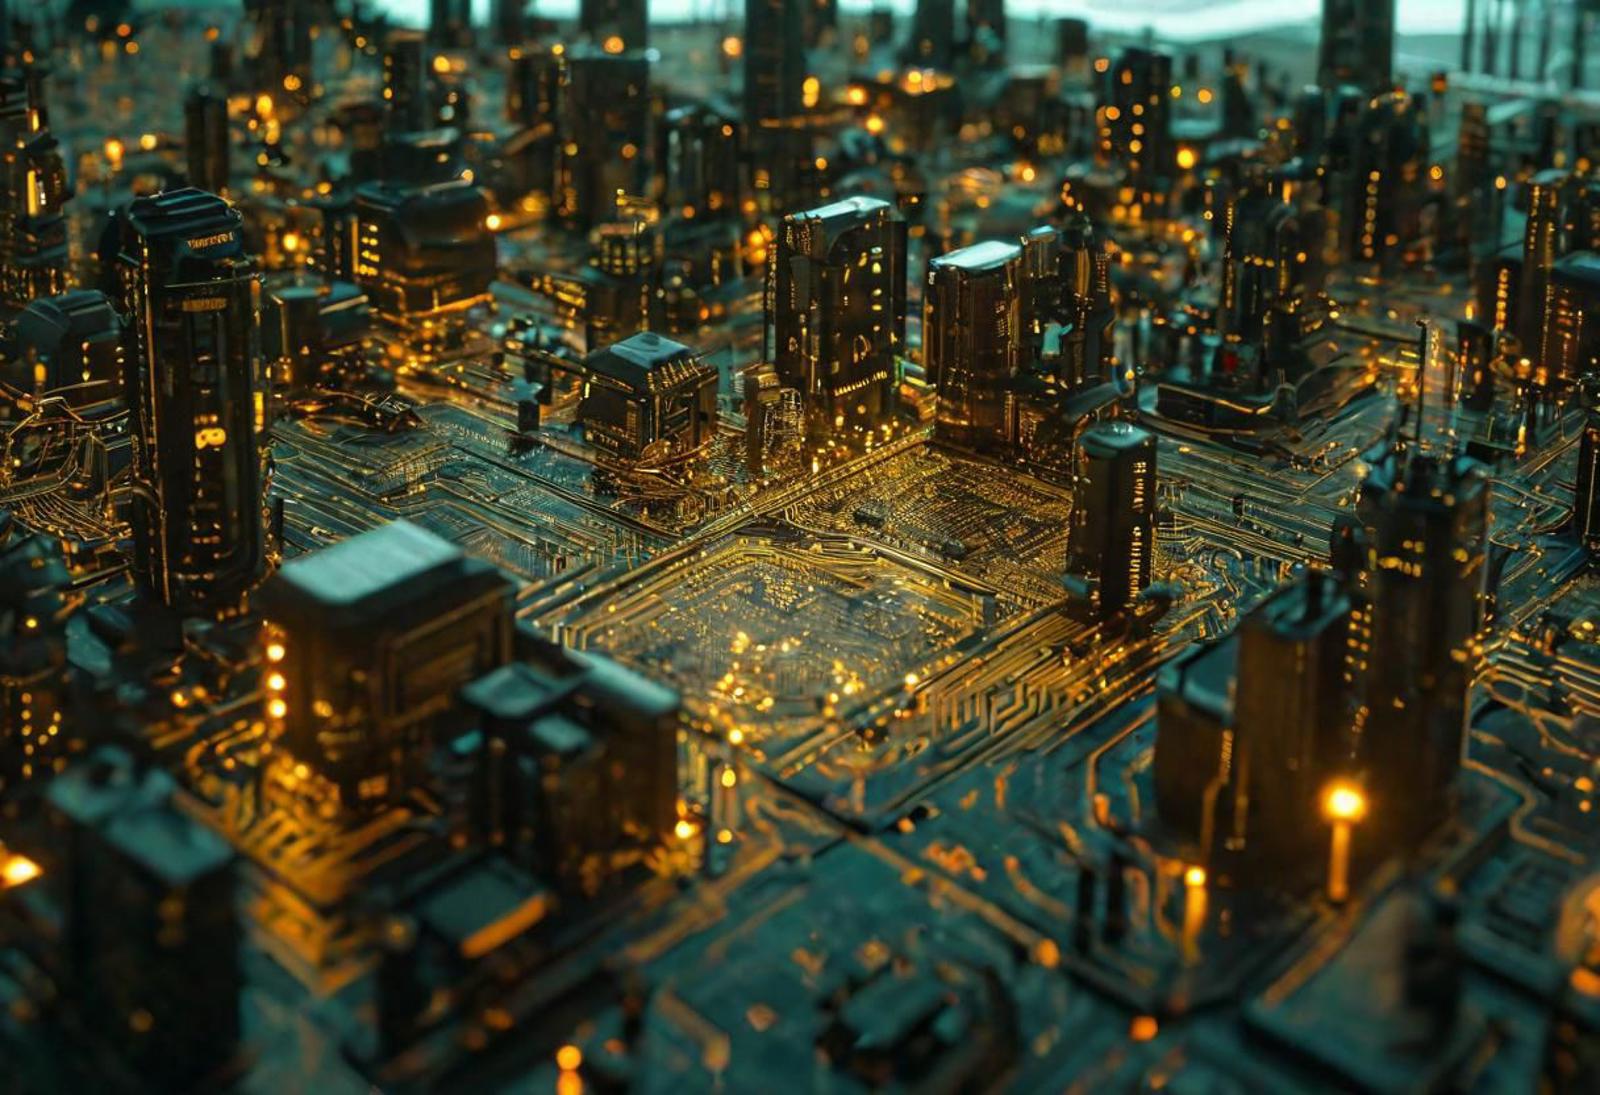 Dark Futuristic Circuit Boards image by GenBlue